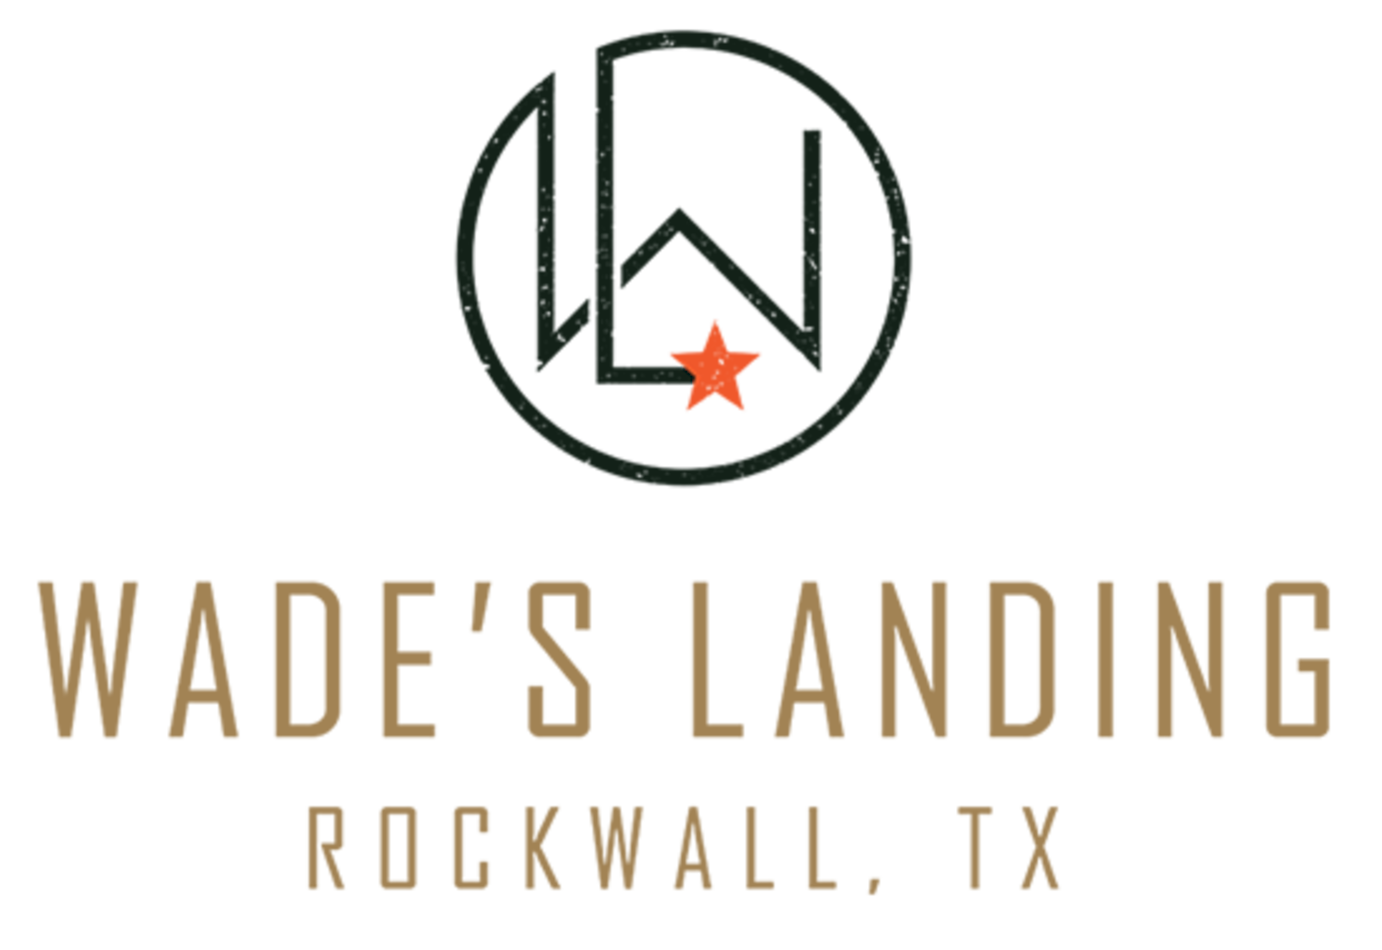 Wades location logo